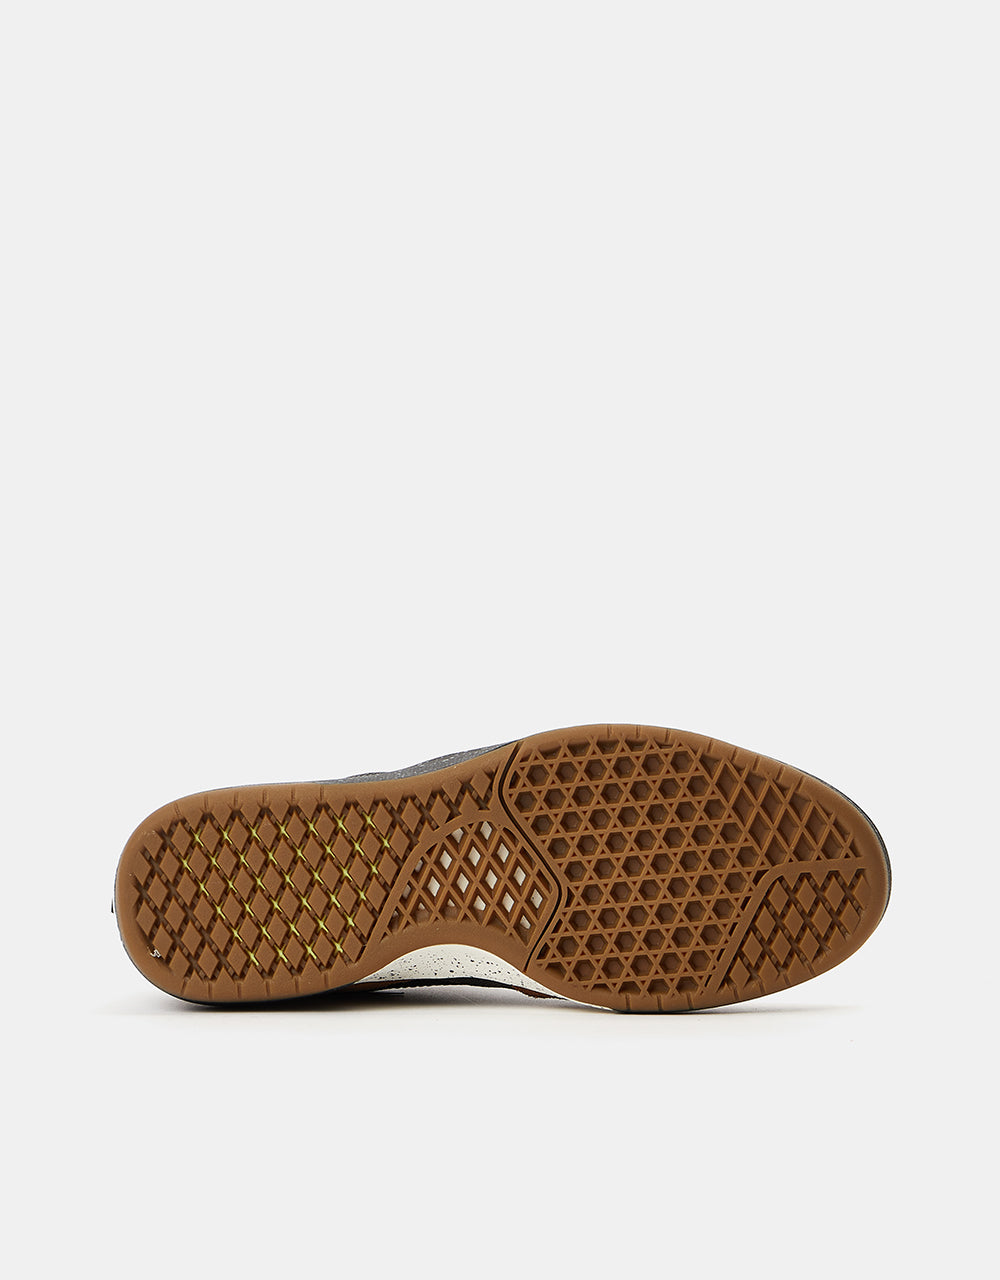 Vans Zahba Skate Shoes - Brown/Multi